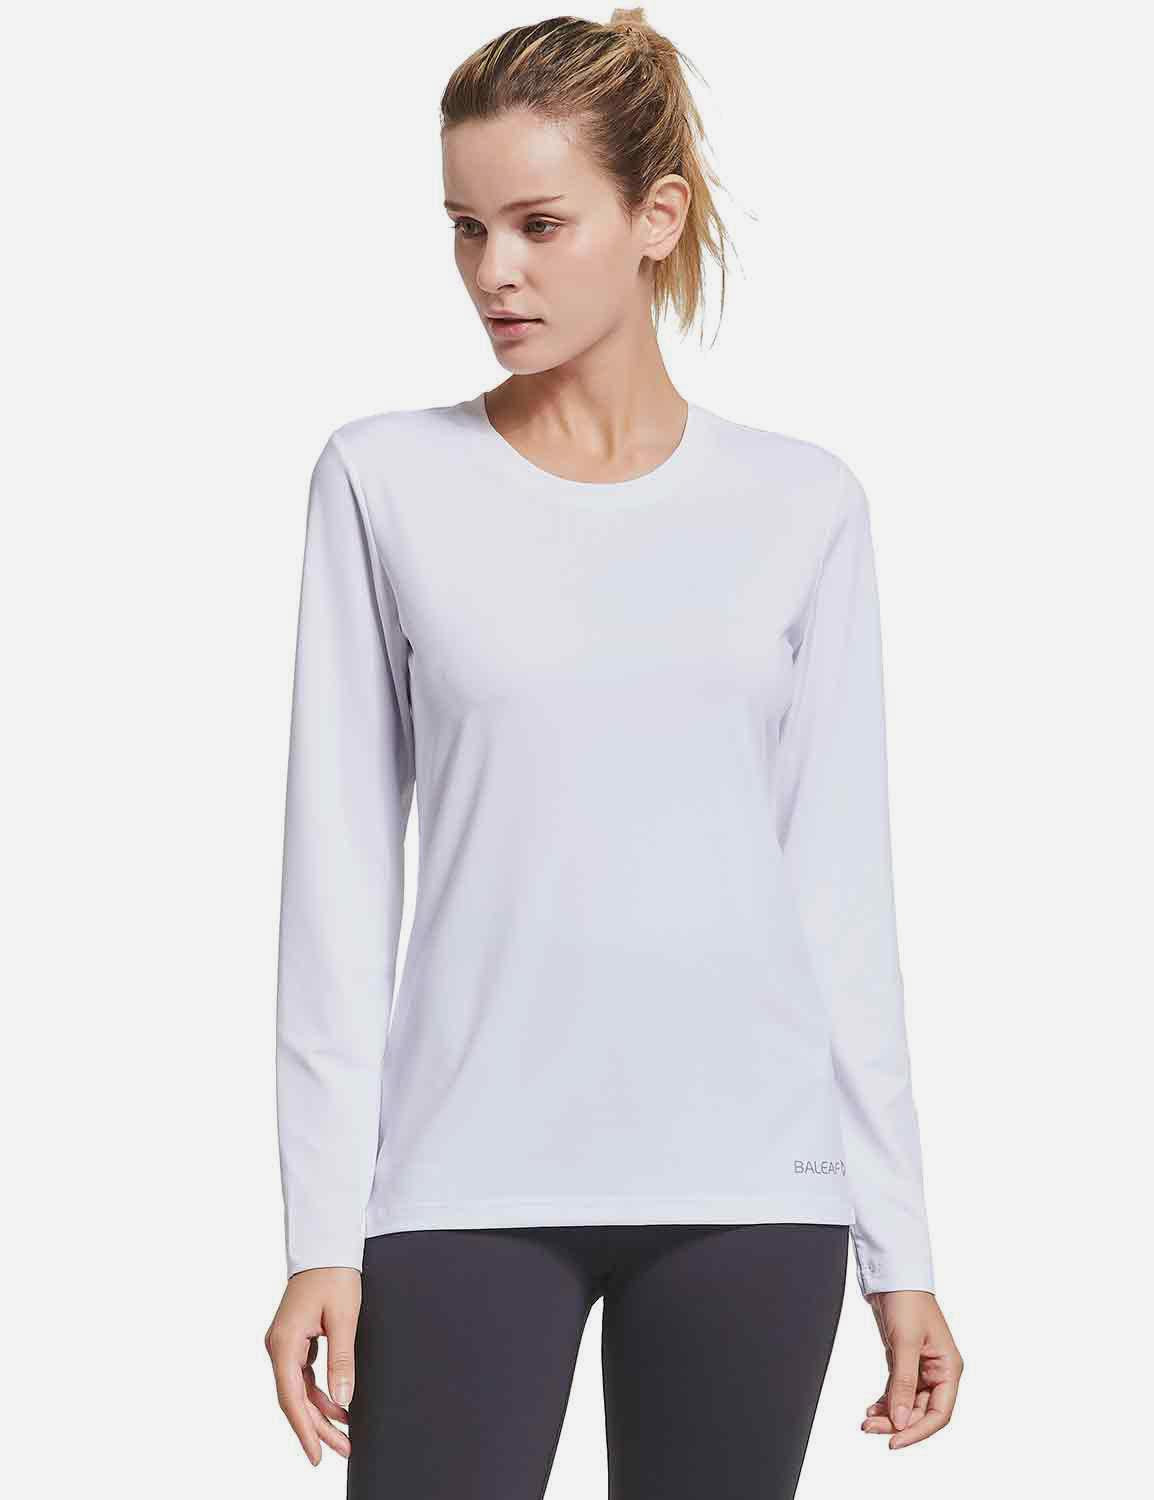 BALEAF Women's Loose Fit Tagless Workout Long Sleeved Shirt abd294 White Front